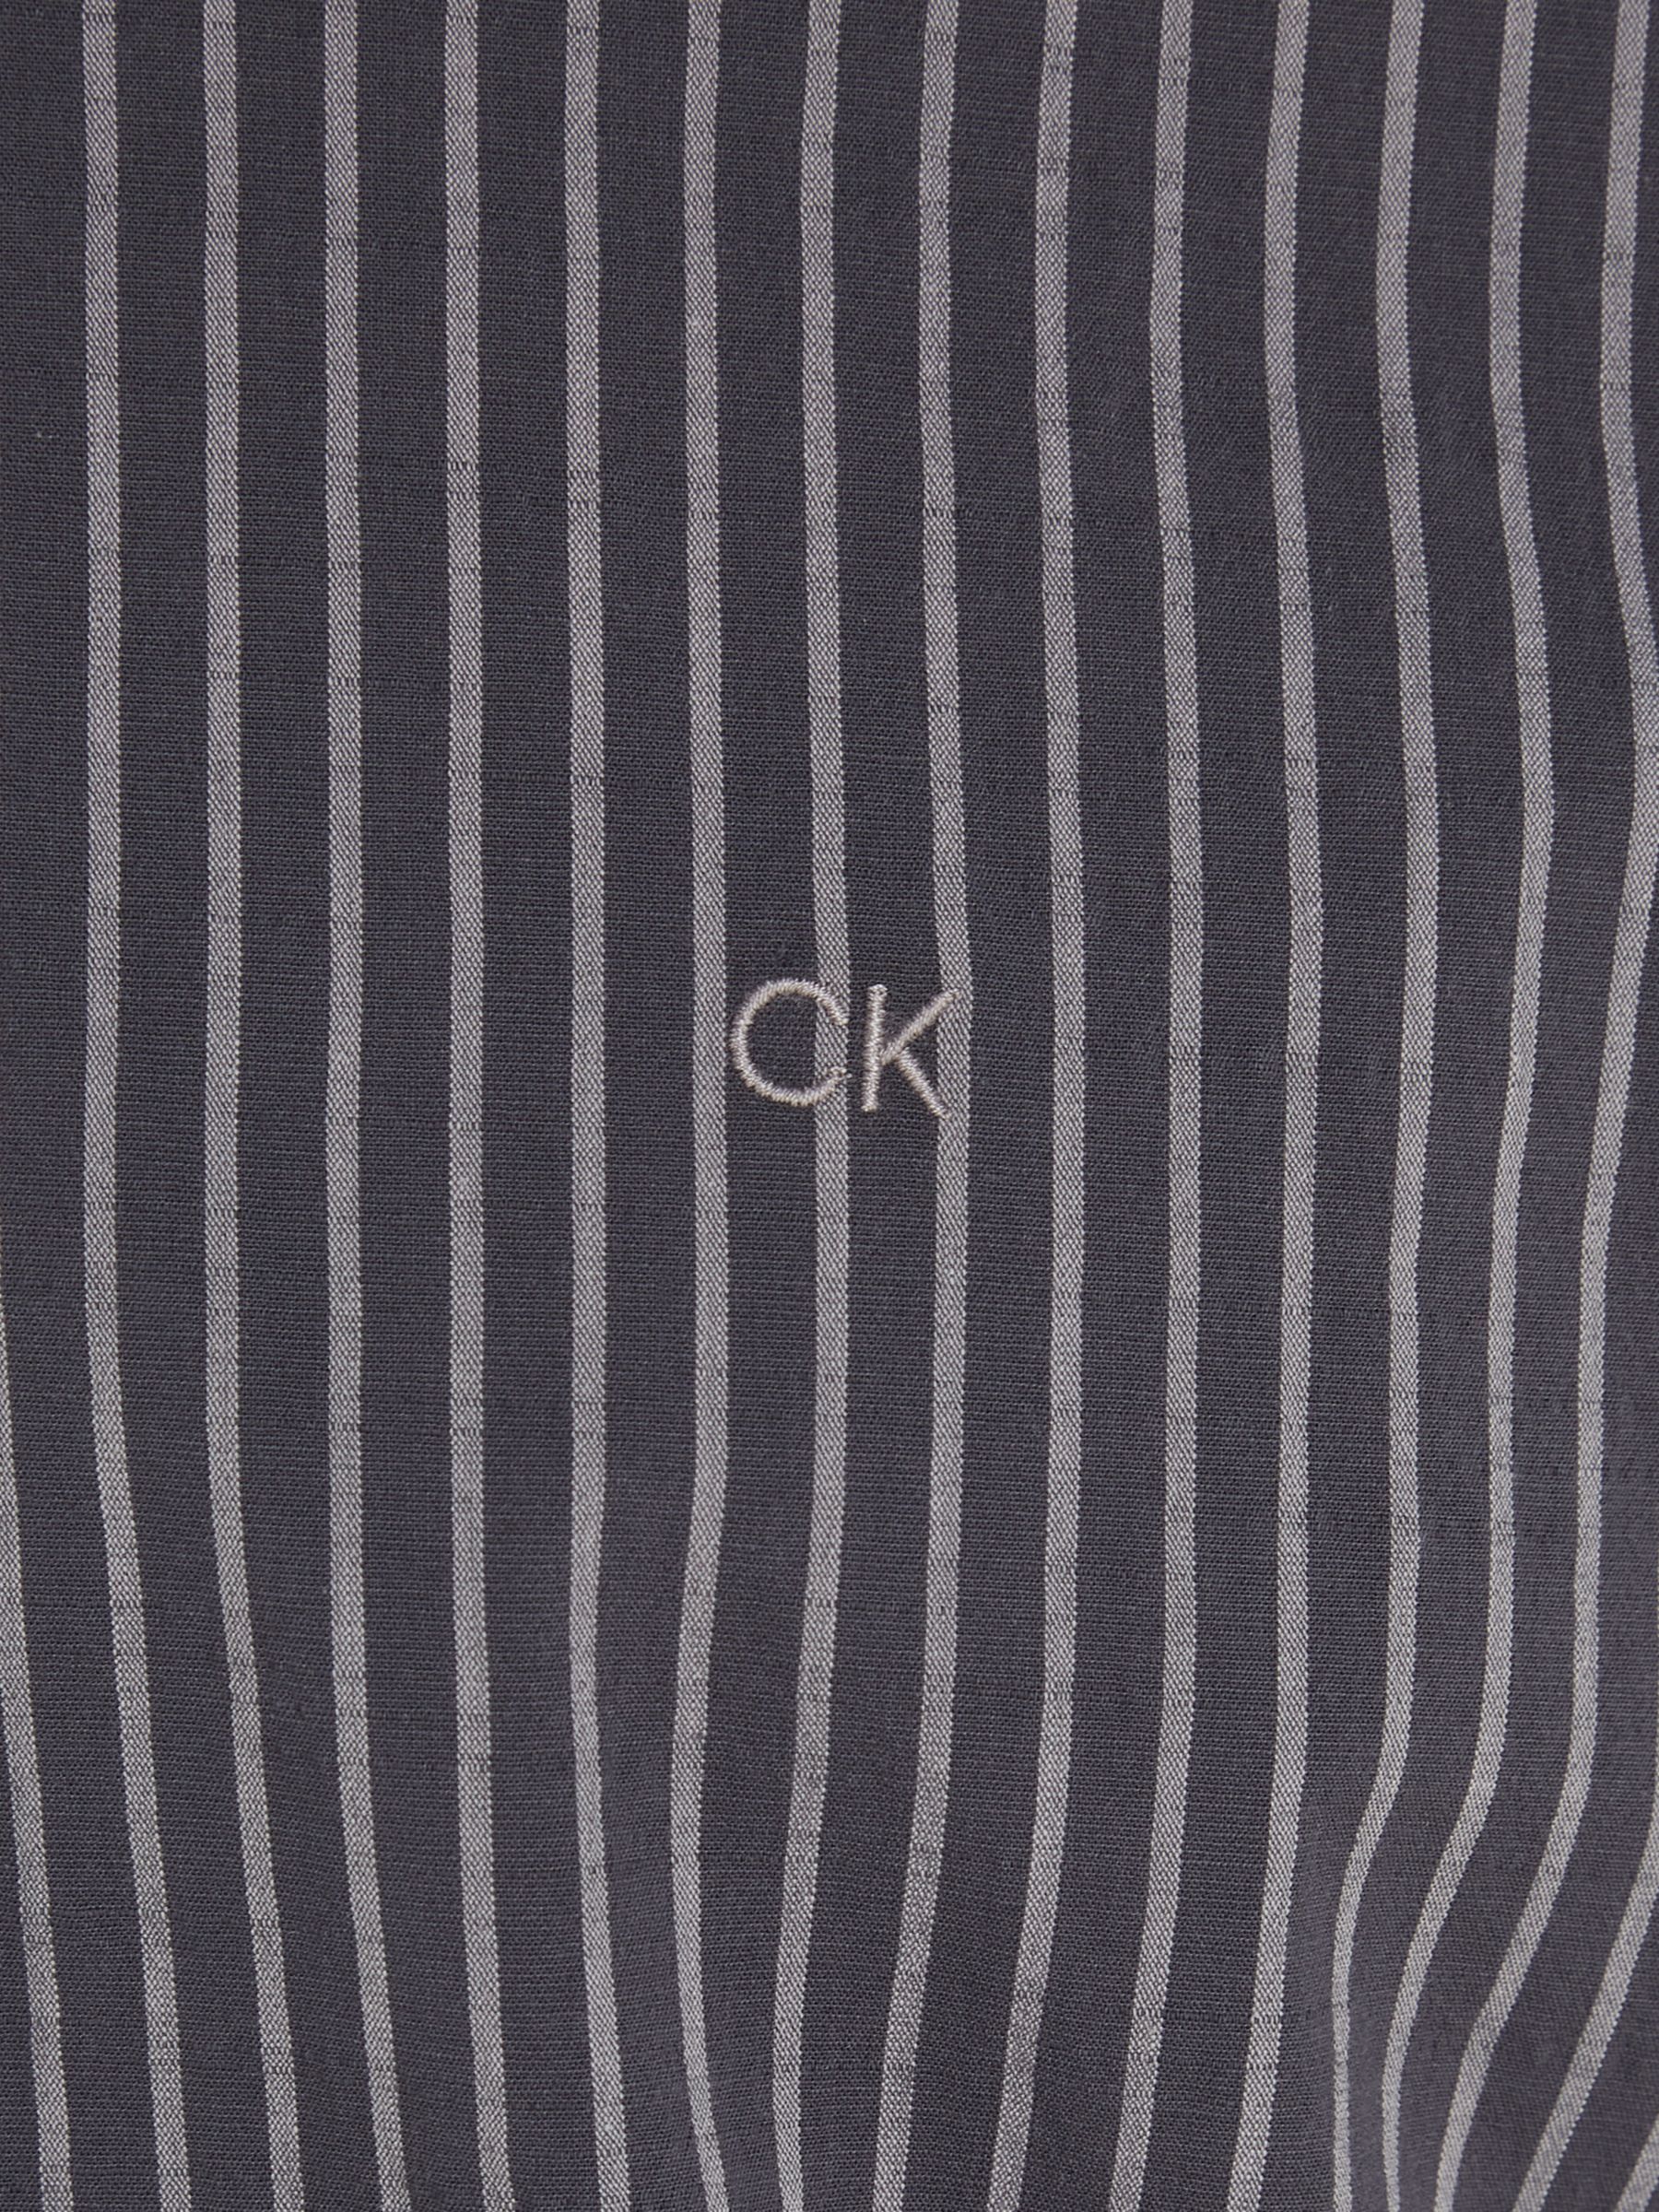 Calvin Klein Stretch Stripe Long Sleeve Shirt, Grey, S